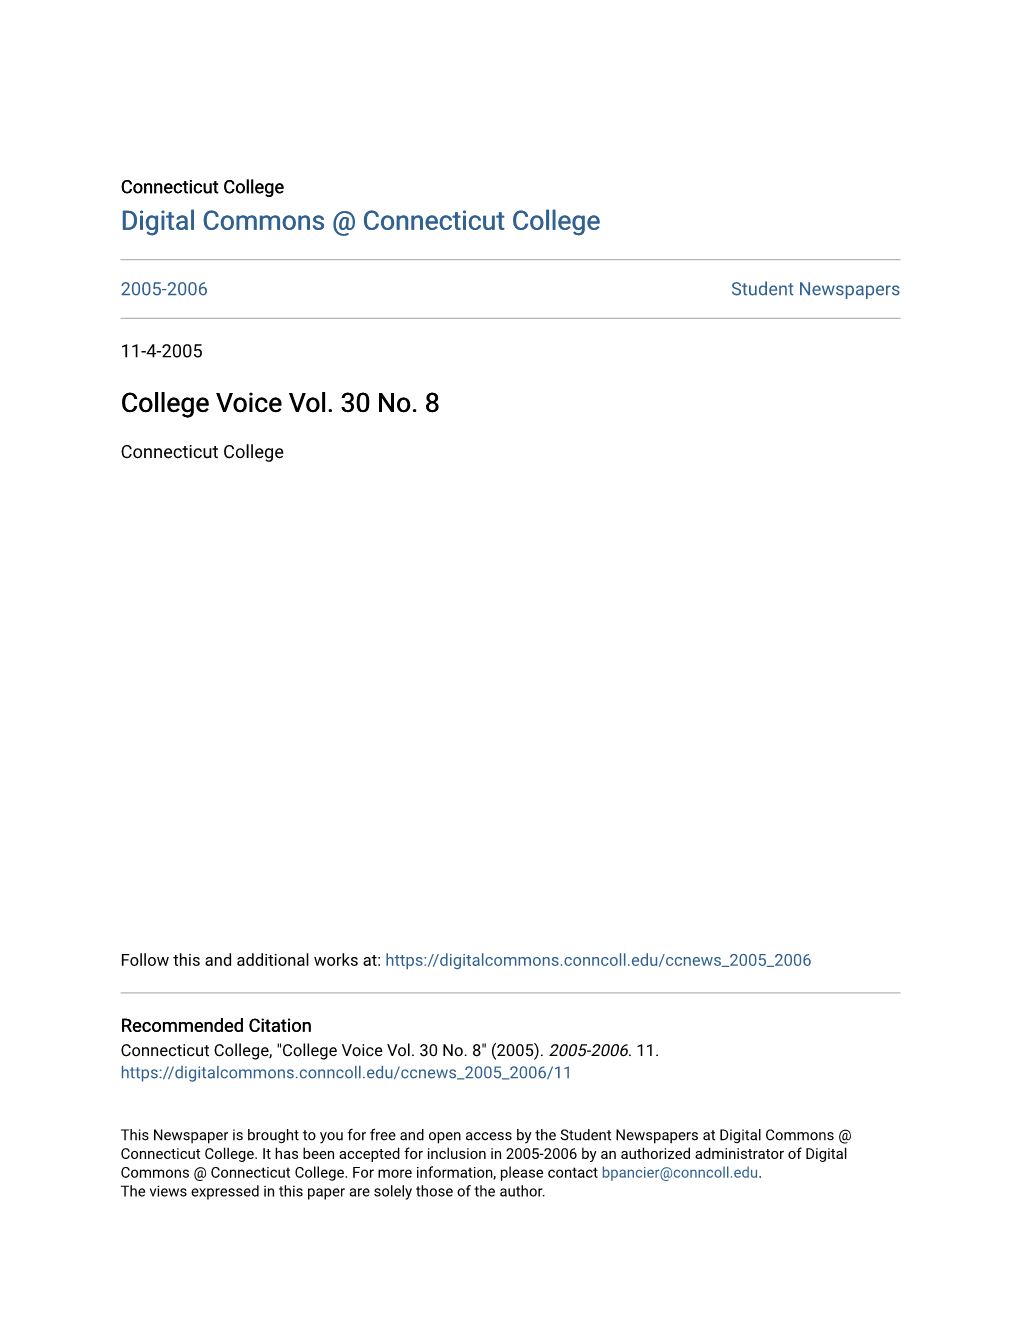 College Voice Vol. 30 No. 8